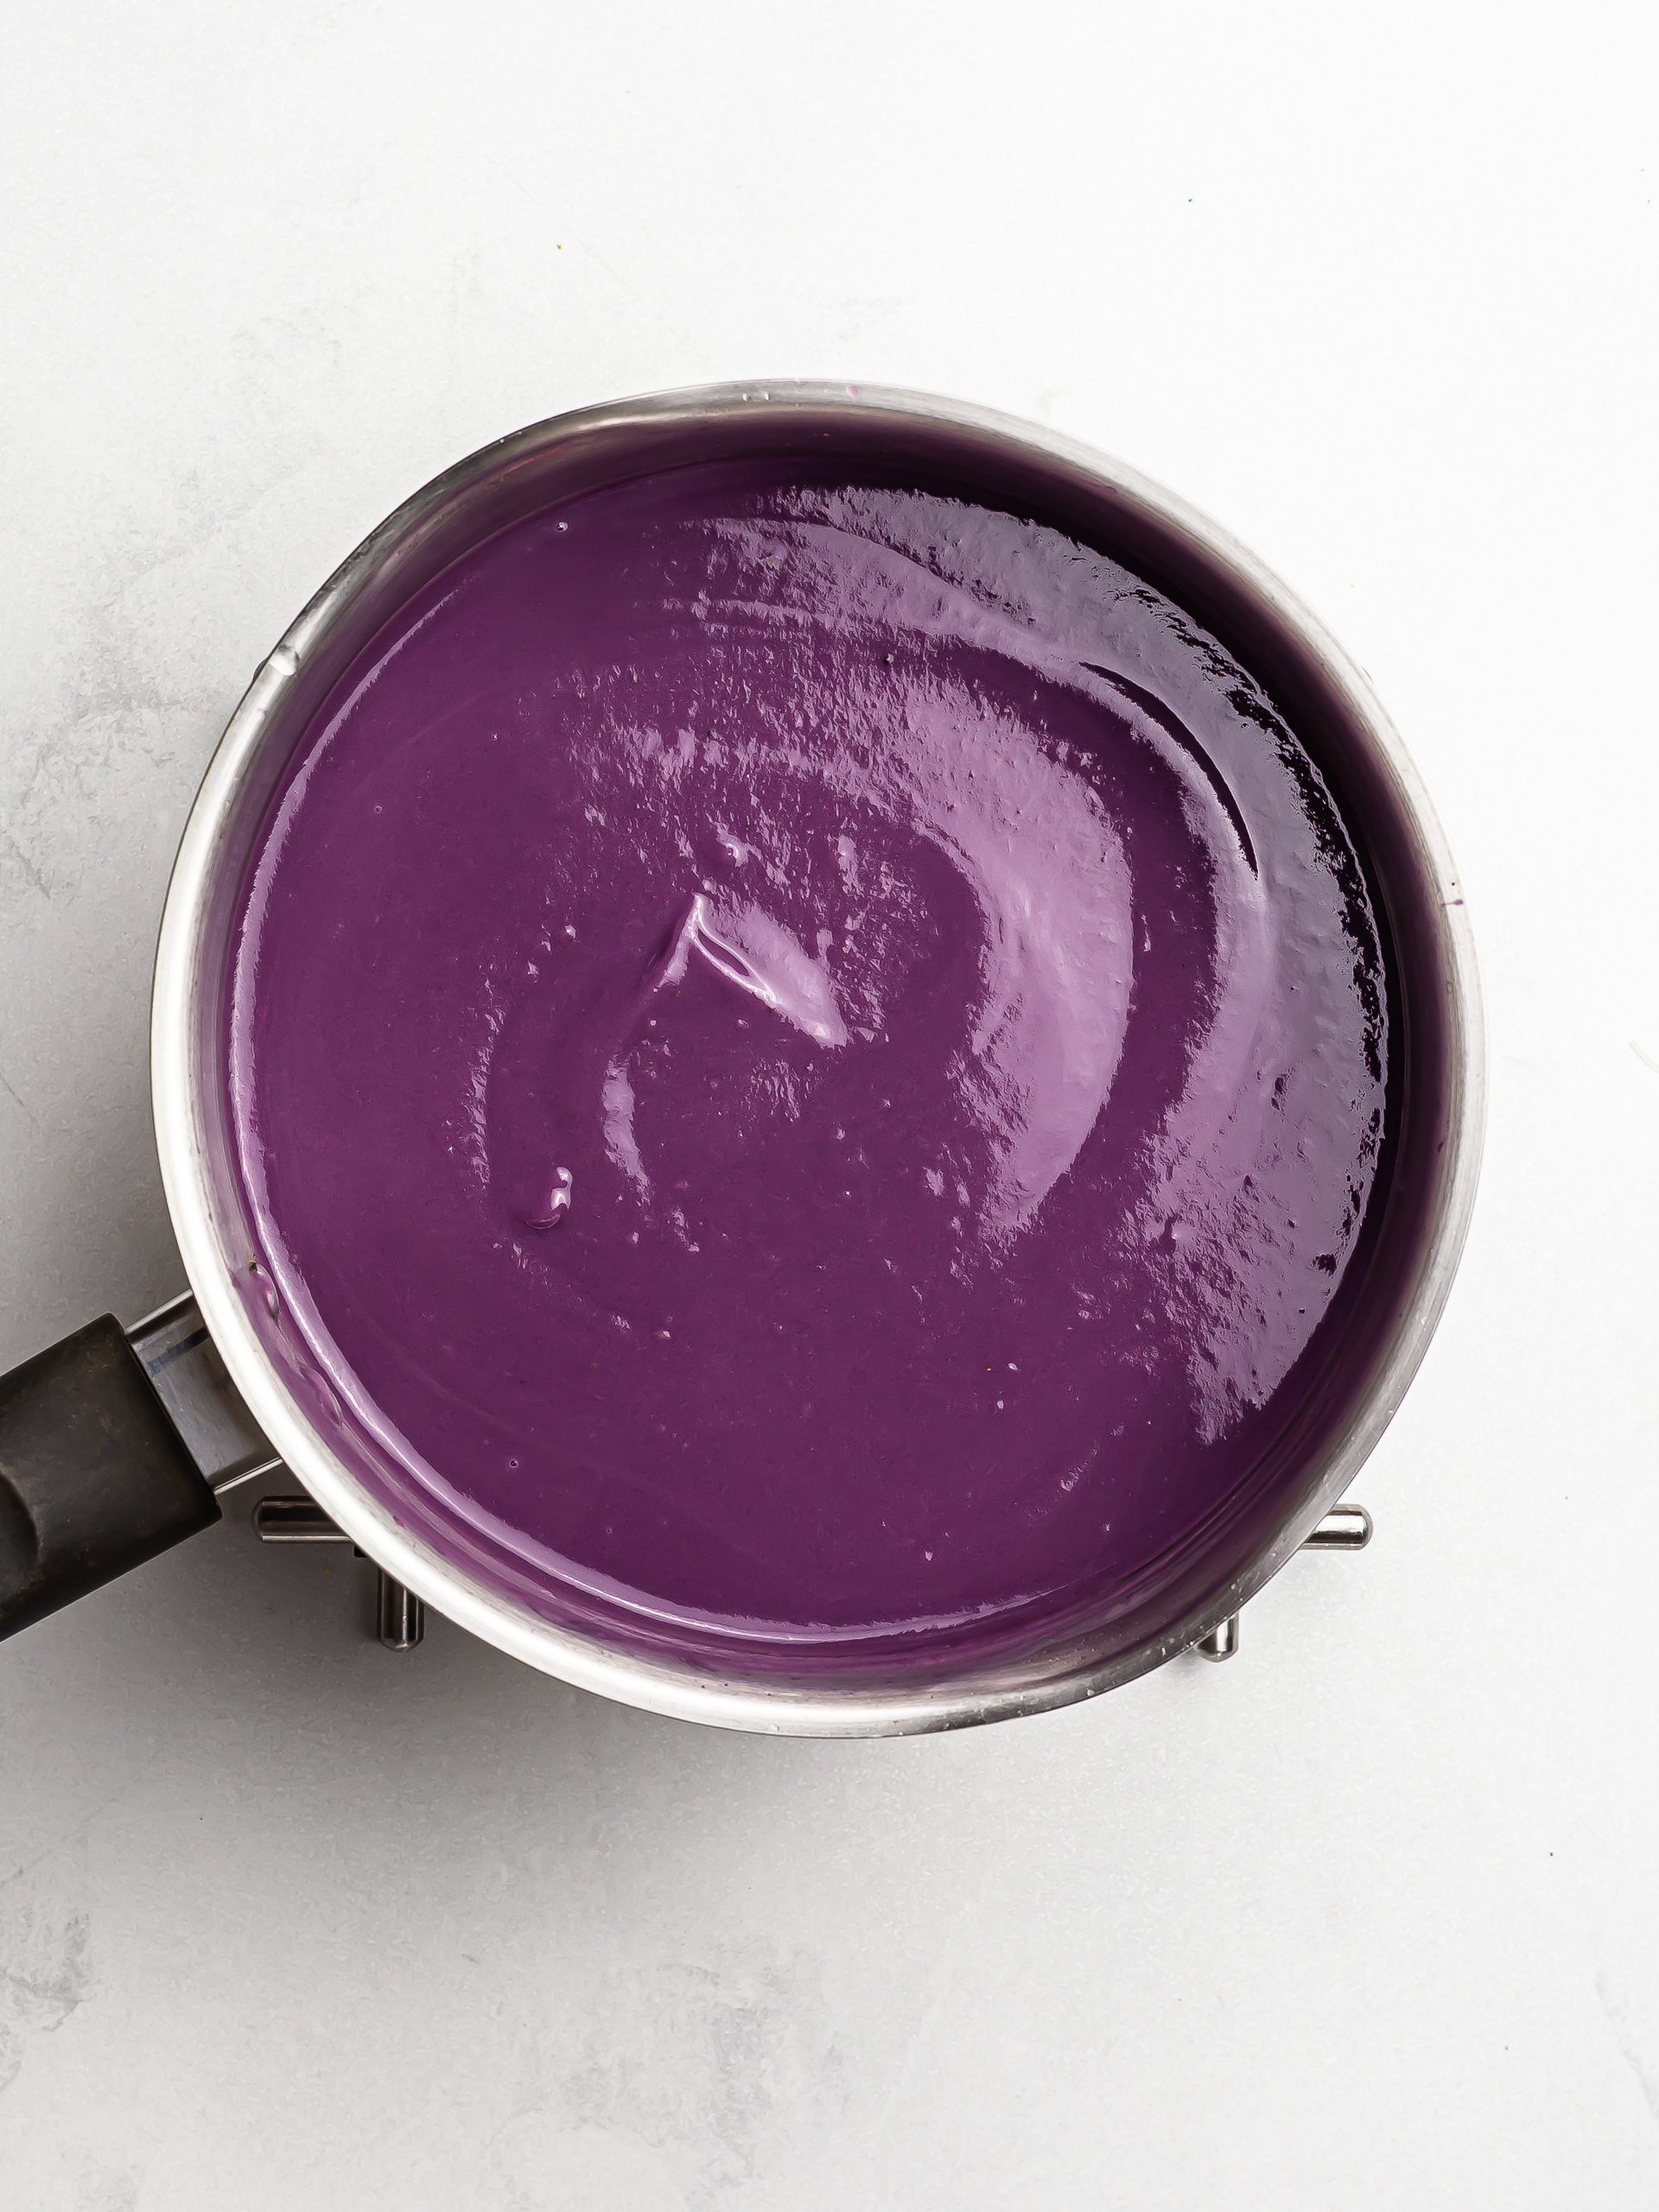 blended purple yam soup velouté in a pot